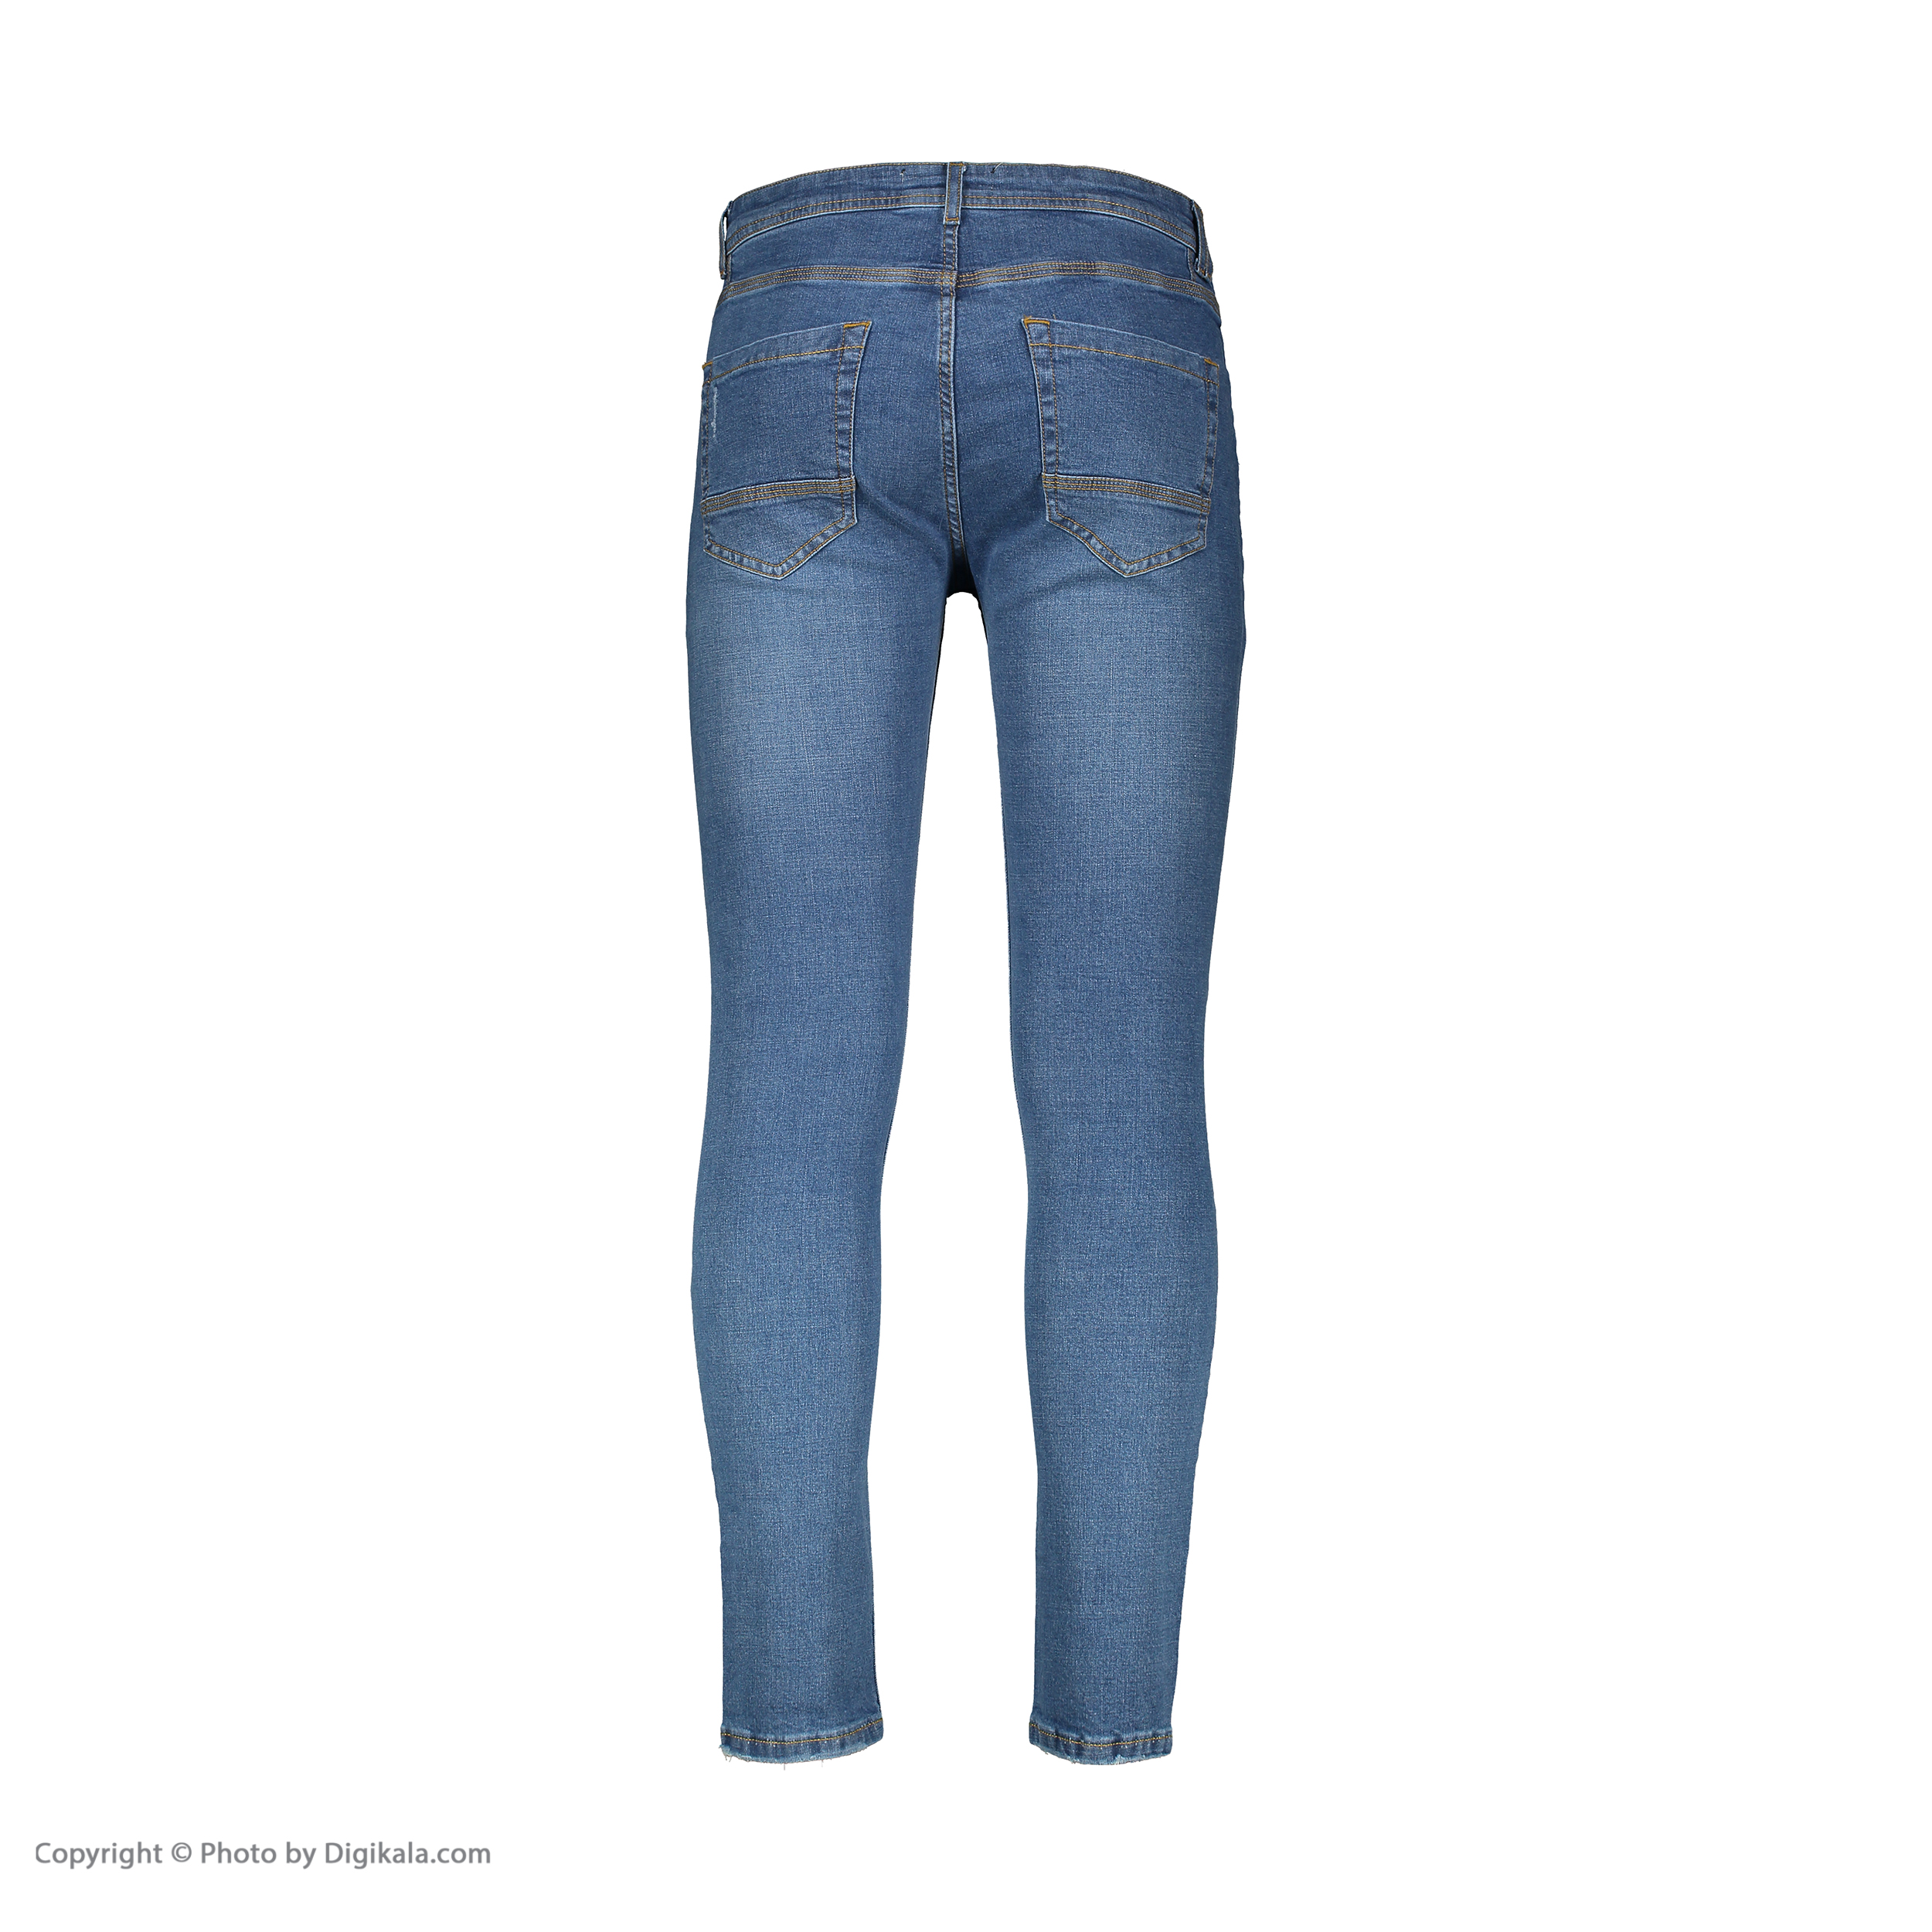 شلوار جین مردانه آر ان اس مدل 1133024-50 - آبی روشن - 4